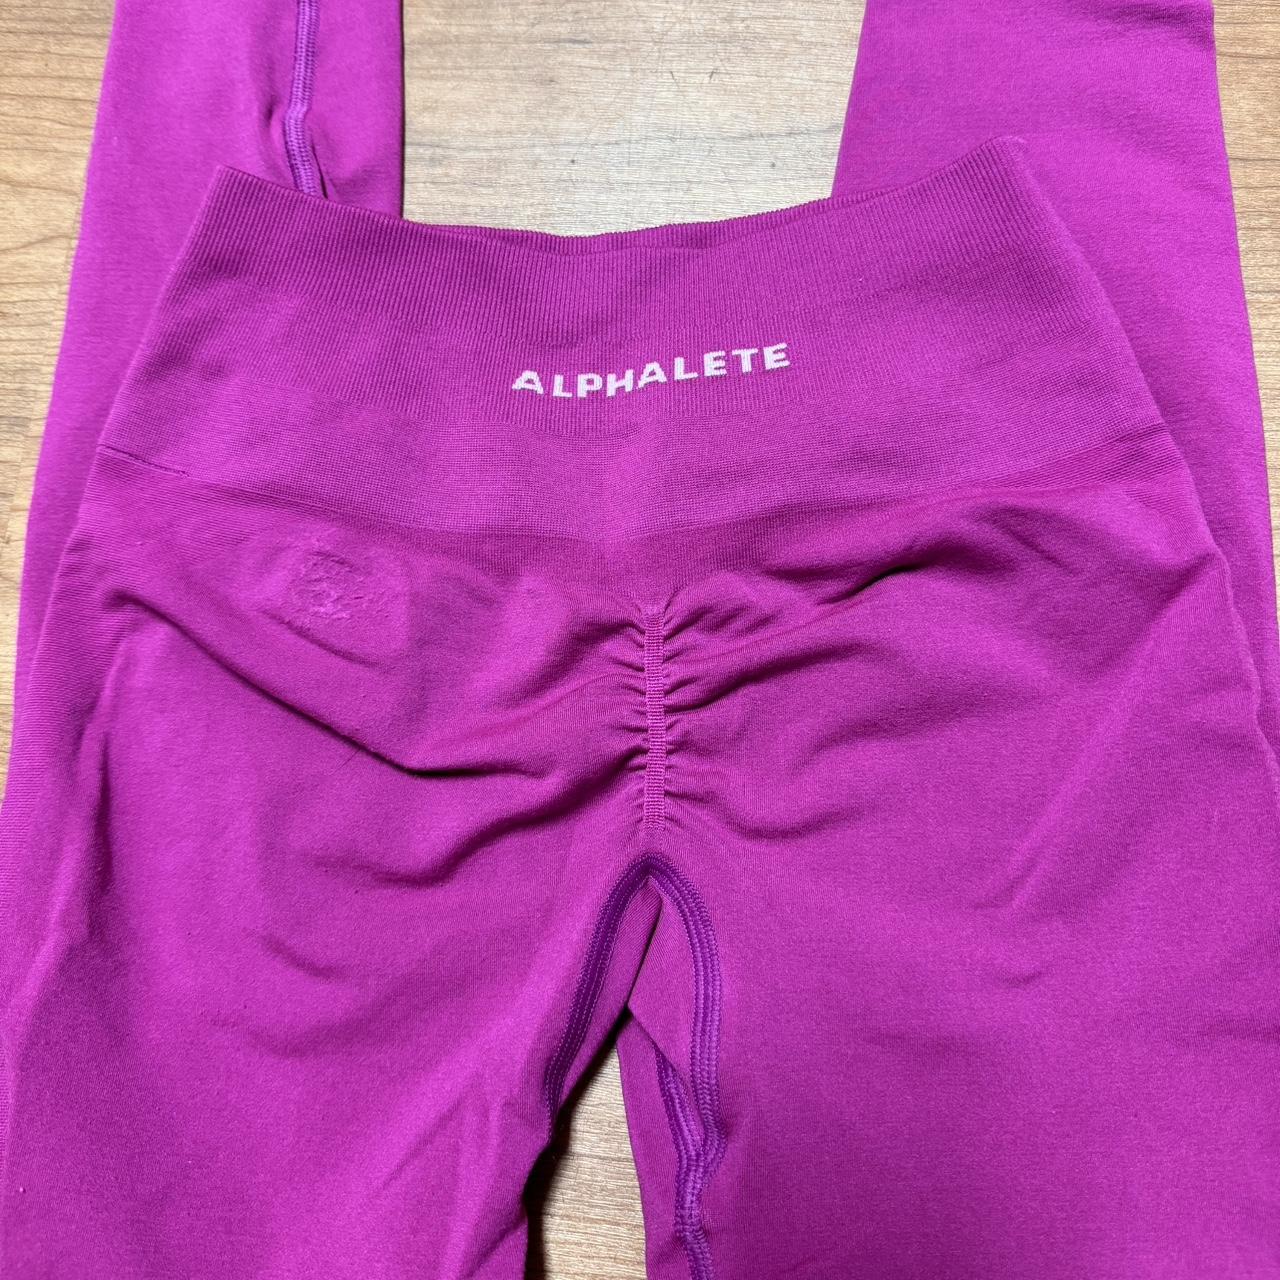 Alphalete Revival Leggings in a light purple/lilac💜 - Depop